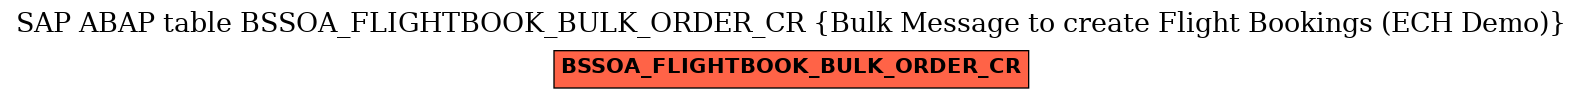 E-R Diagram for table BSSOA_FLIGHTBOOK_BULK_ORDER_CR (Bulk Message to create Flight Bookings (ECH Demo))